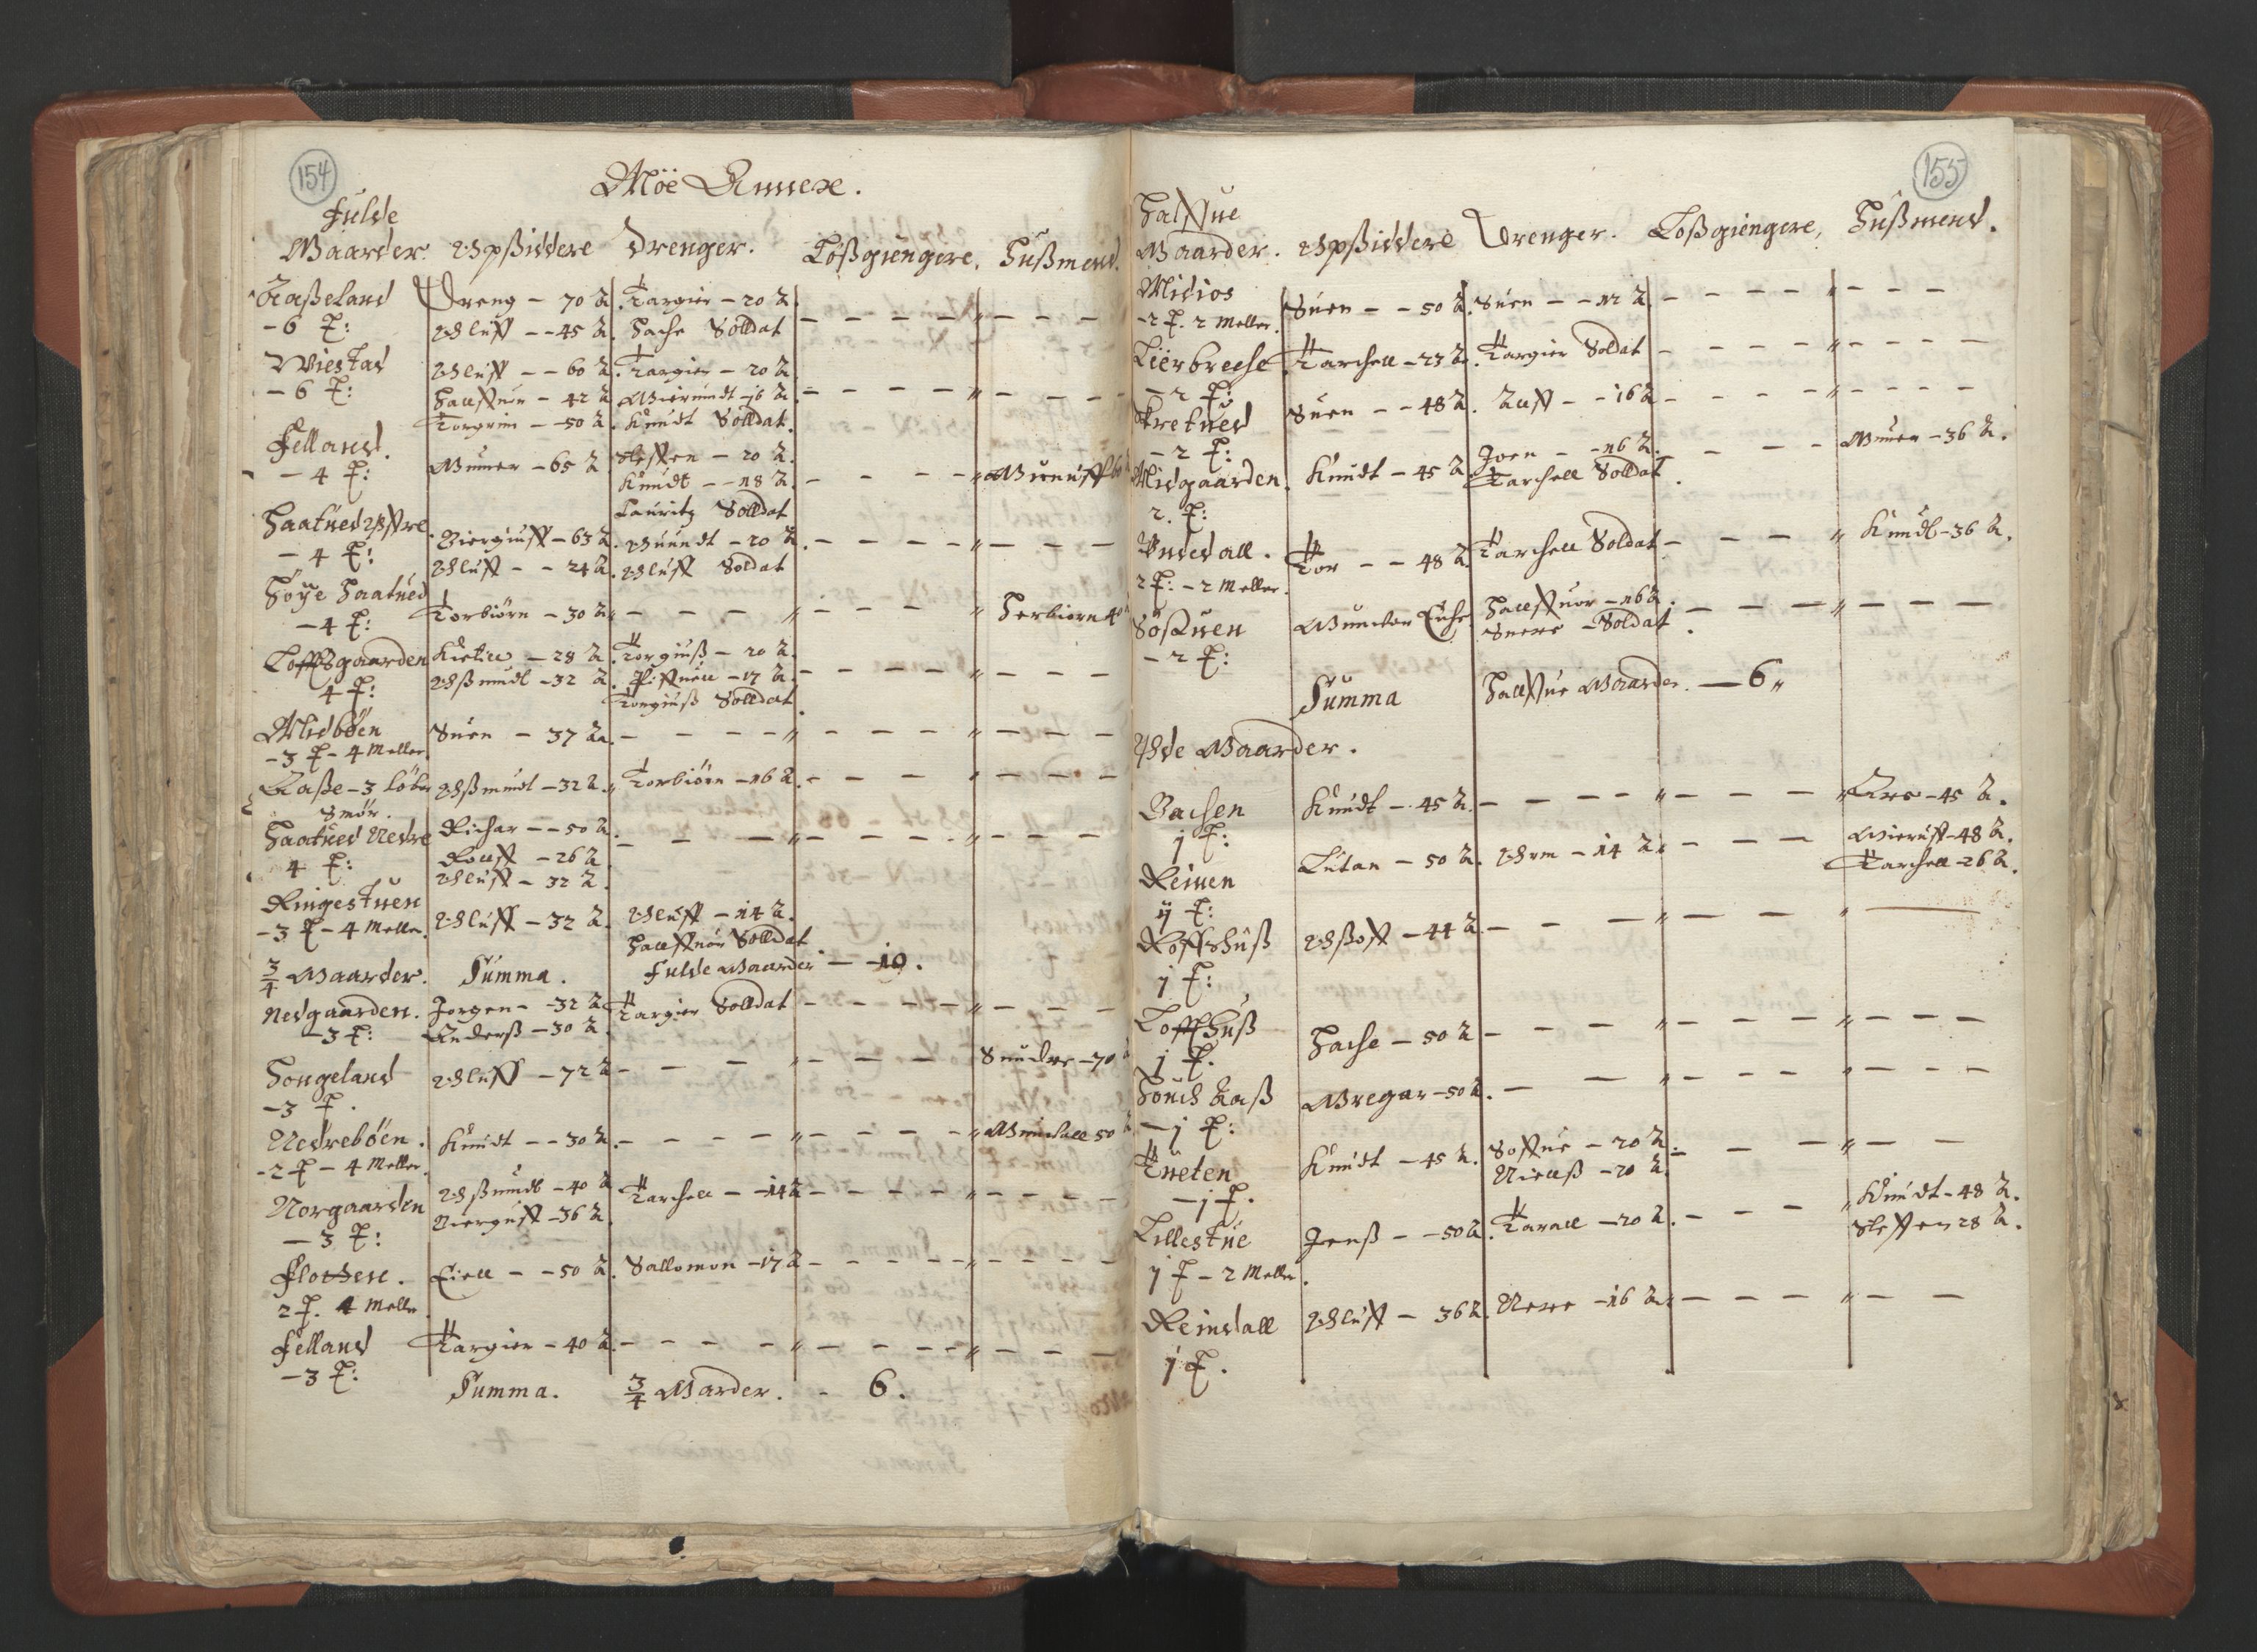 RA, Vicar's Census 1664-1666, no. 12: Øvre Telemark deanery, Nedre Telemark deanery and Bamble deanery, 1664-1666, p. 154-155